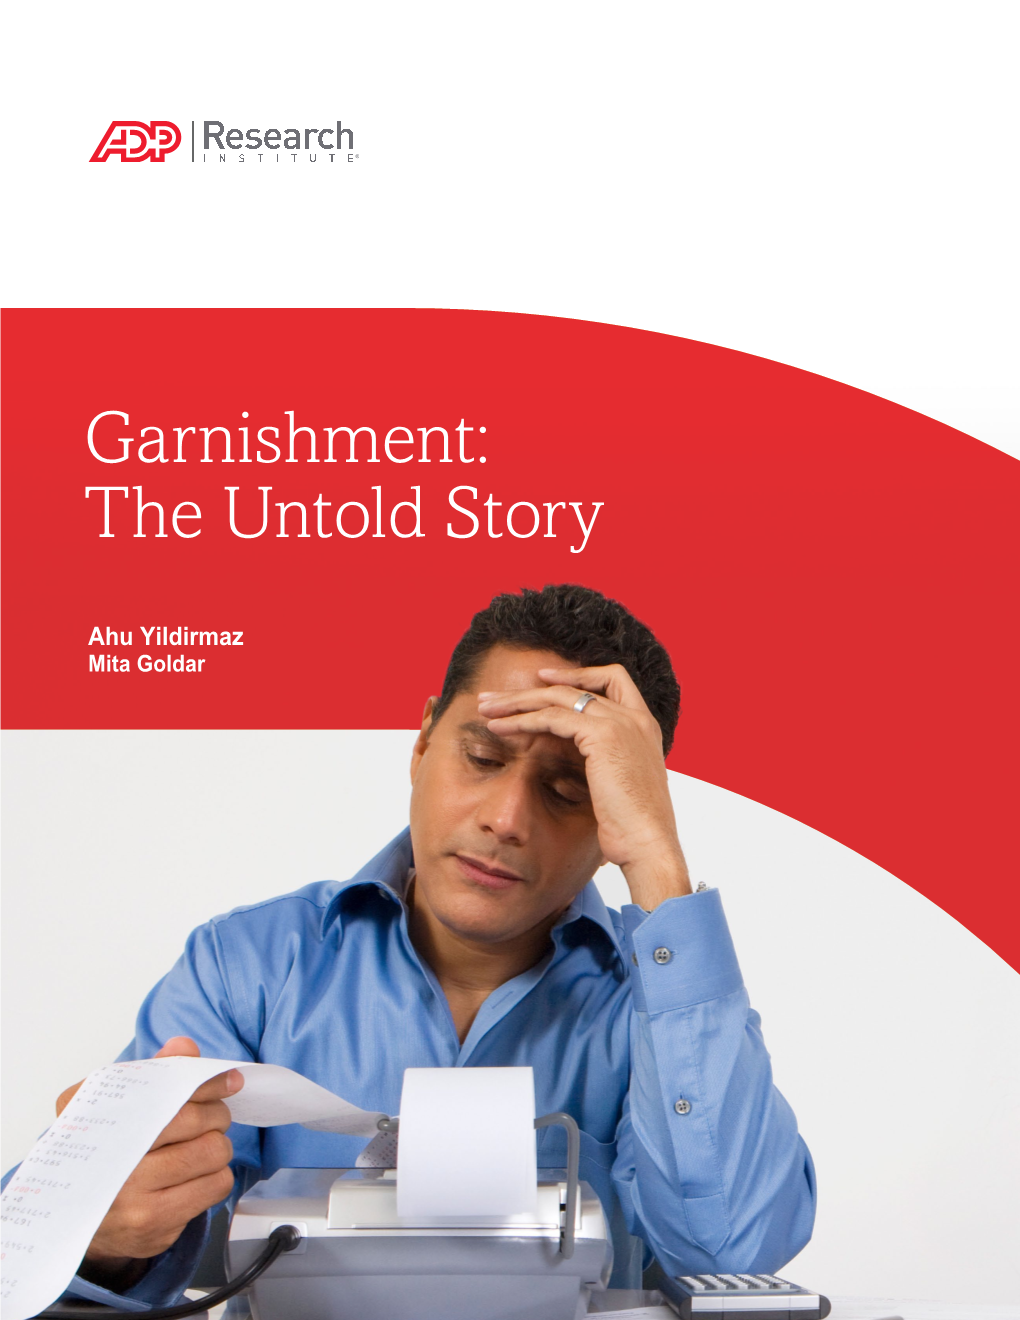 Garnishment: the Untold Story